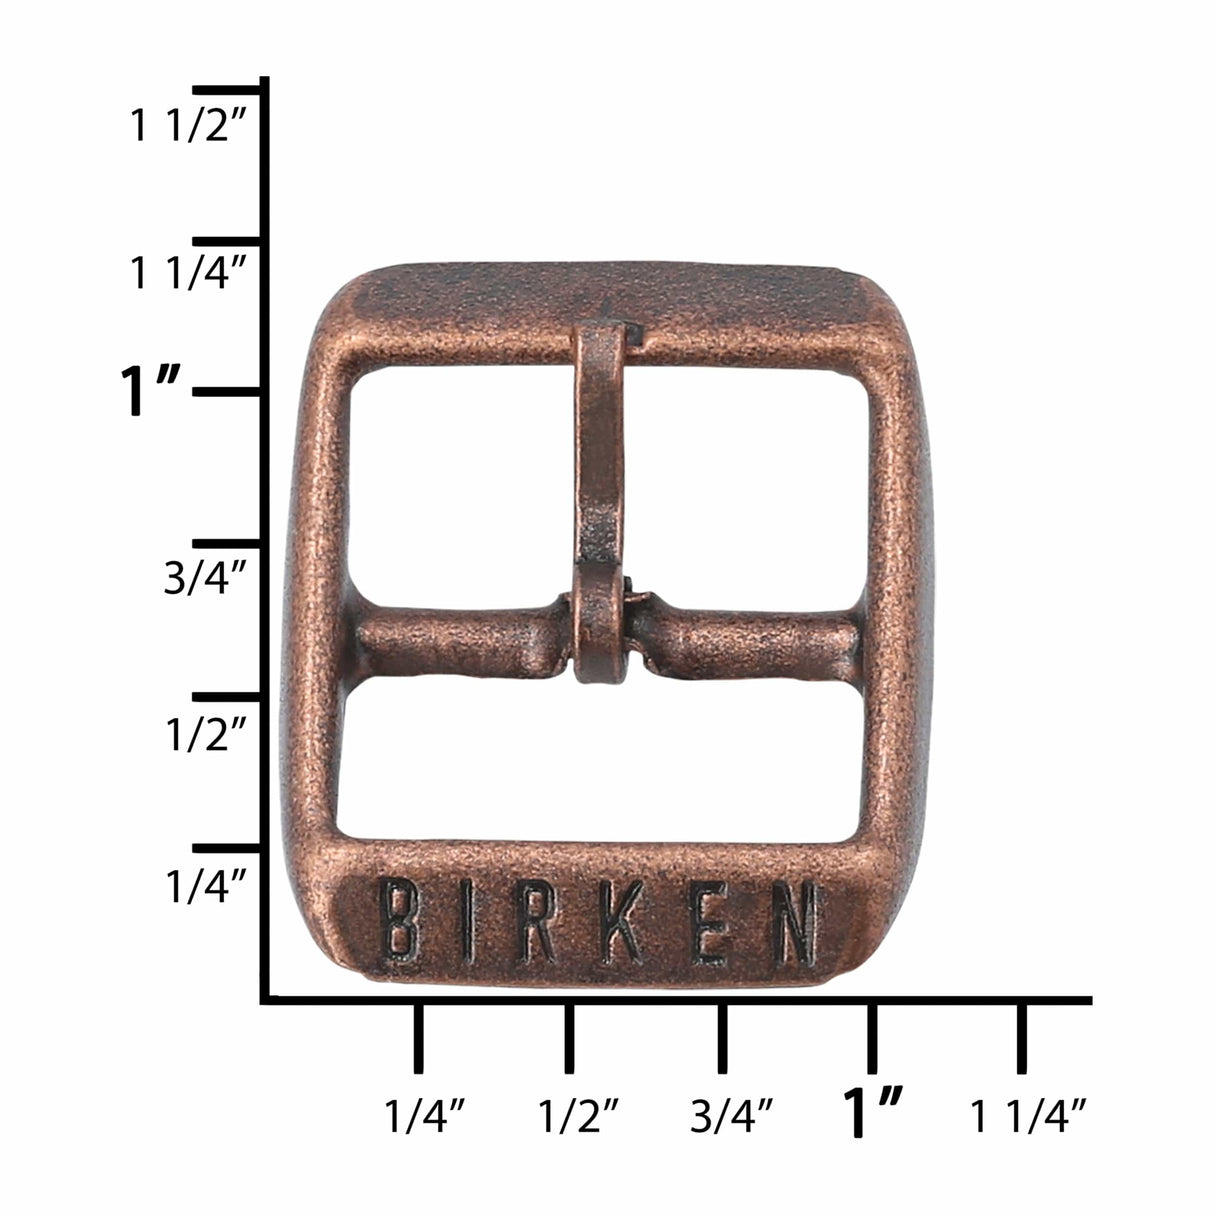 Ohio Travel Bag 19mm Antique Copper, Birkenstock Buckle, Steel, #C-1820-ANTC C-1820-ANTC